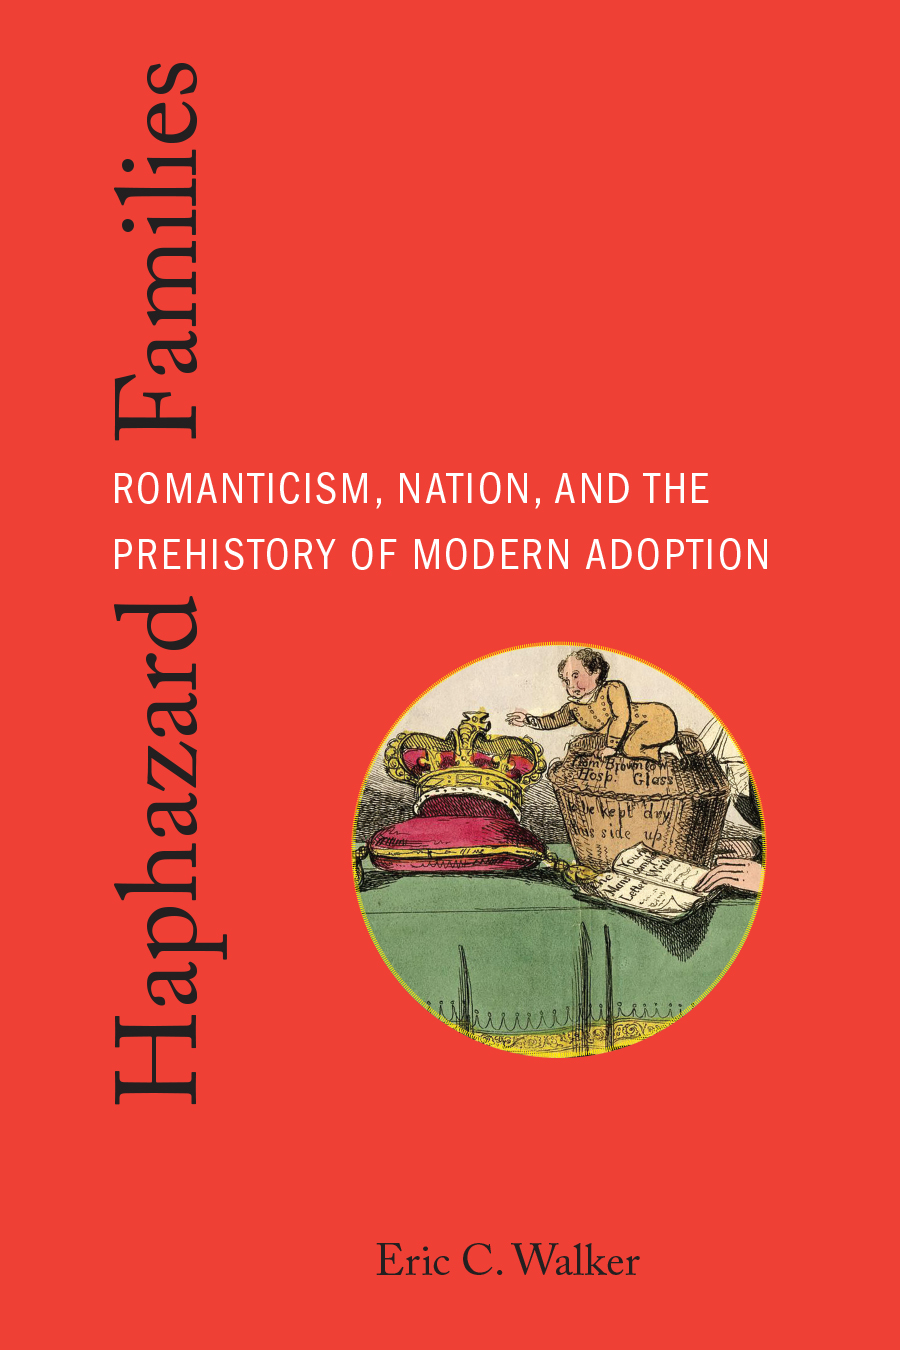 Haphazard Families: Adoption and Romanticism cover